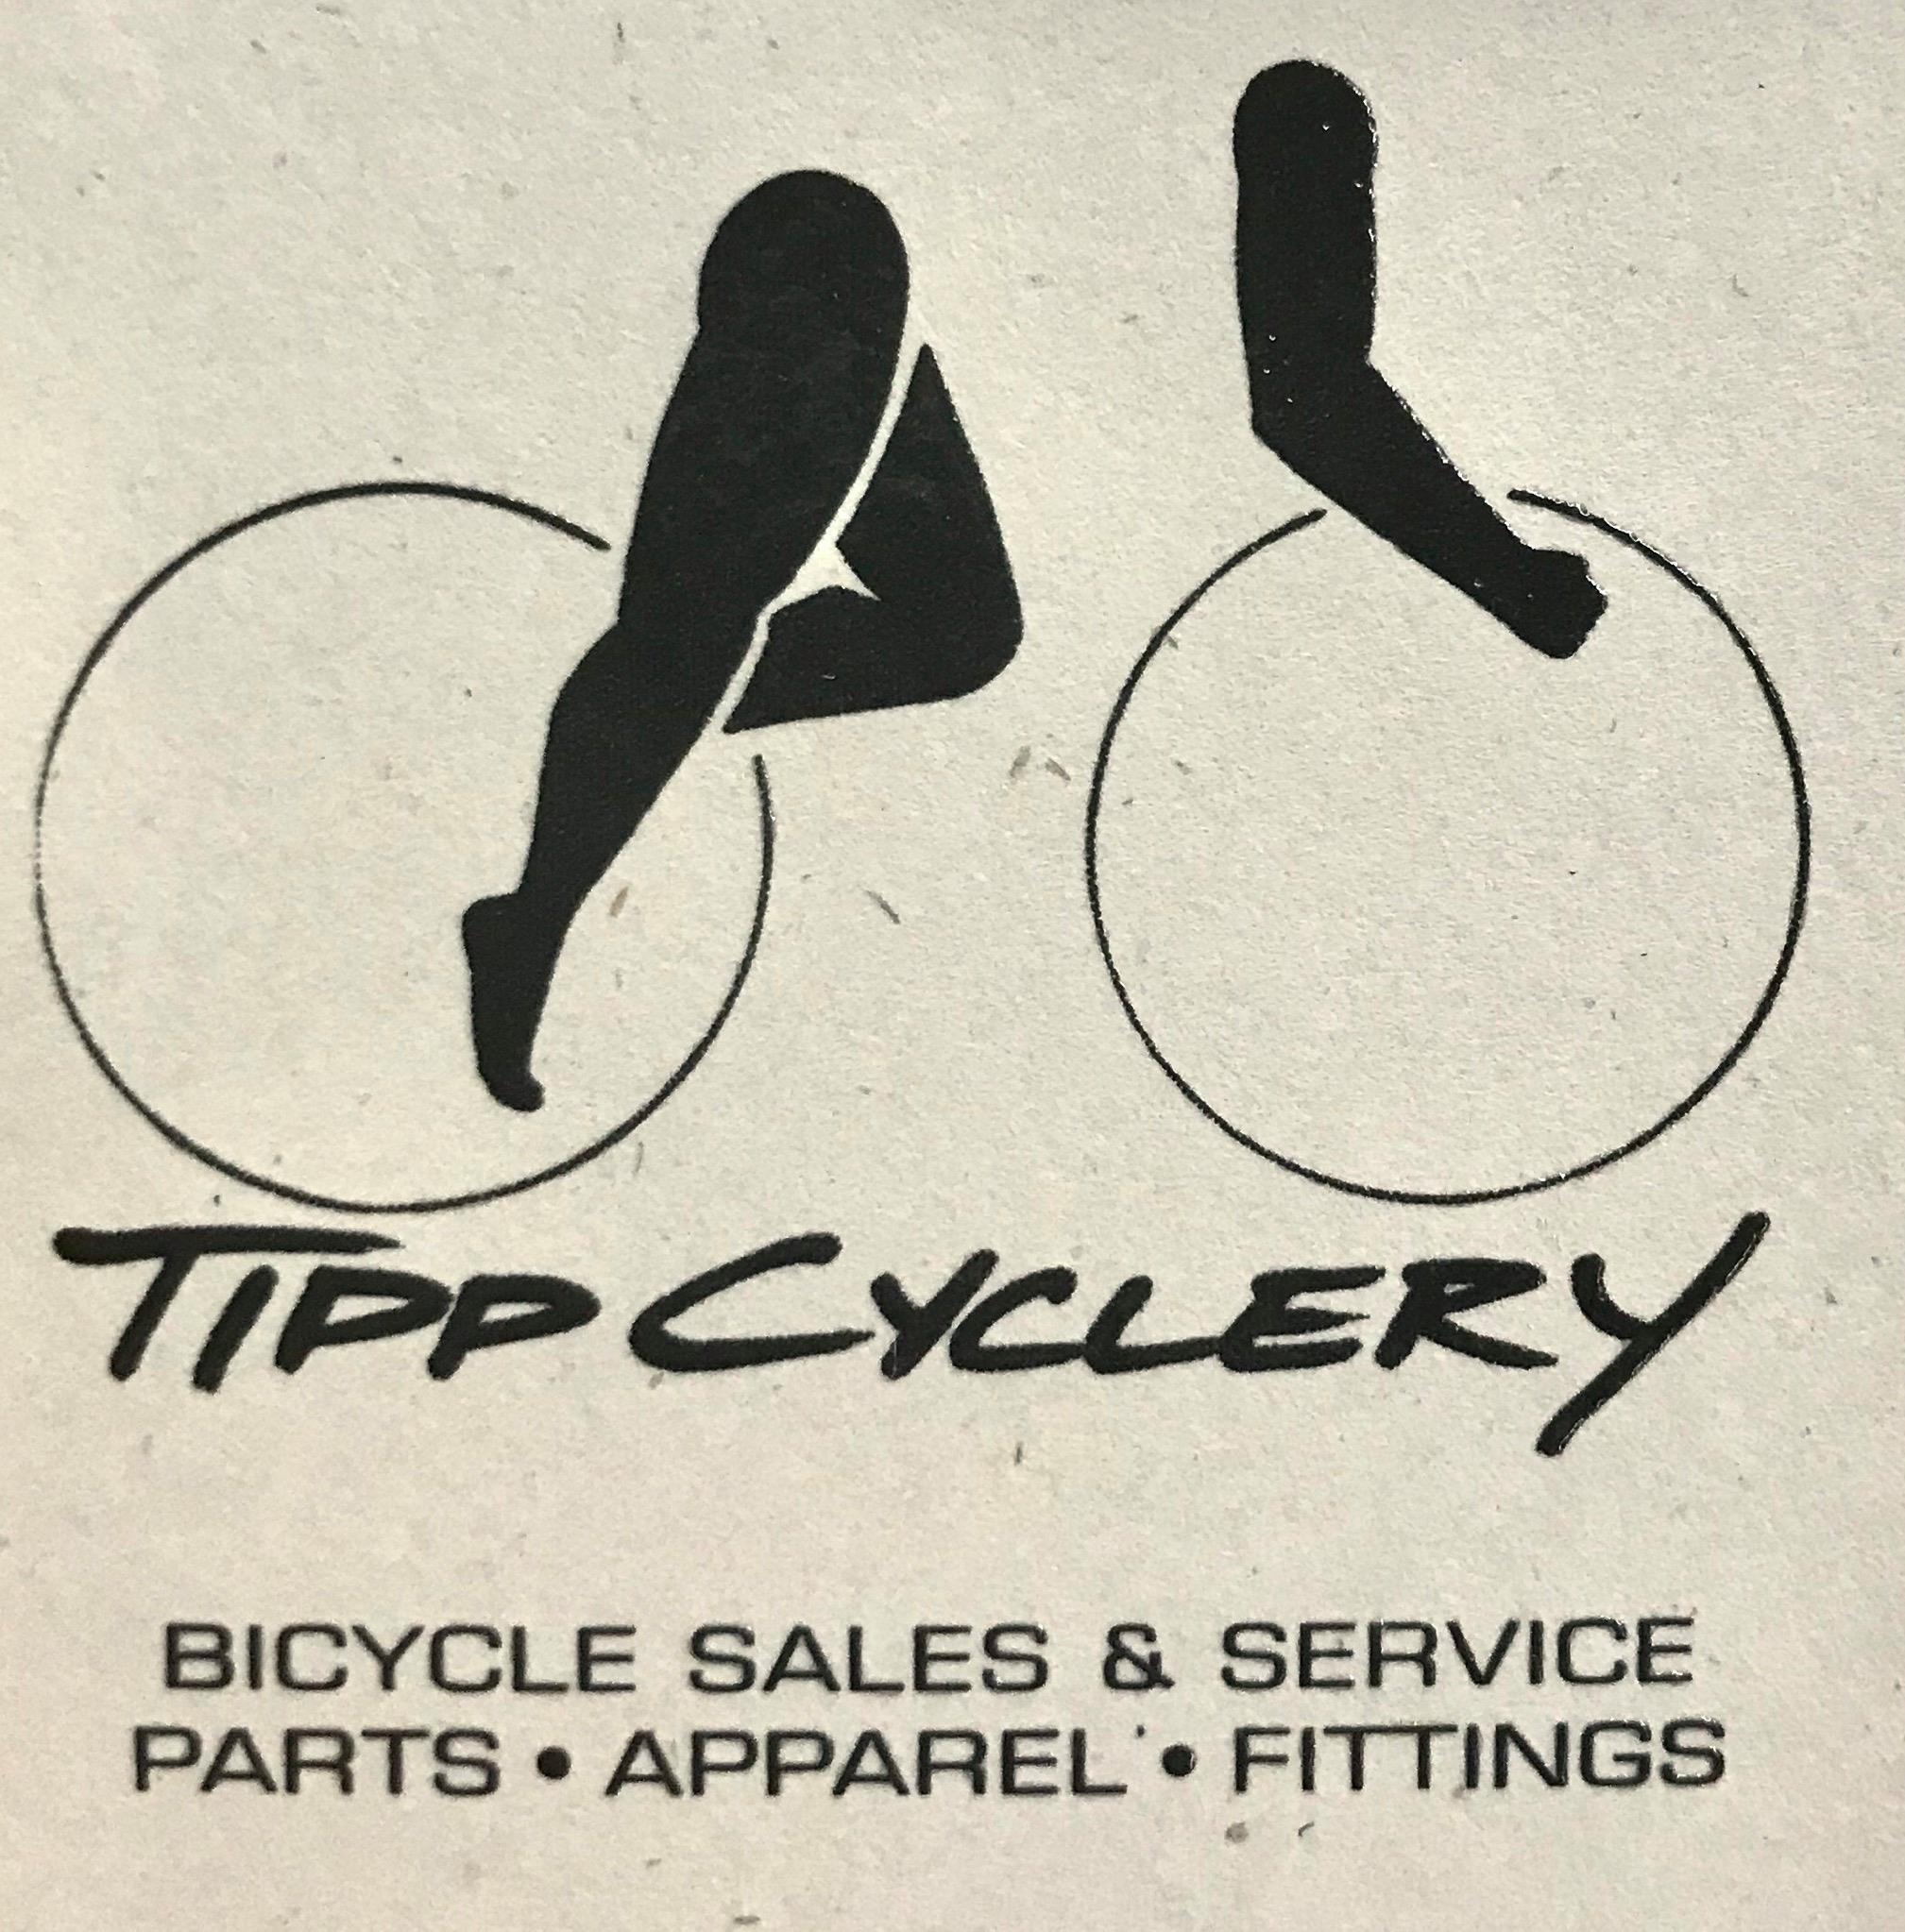 Tipp Cyclery